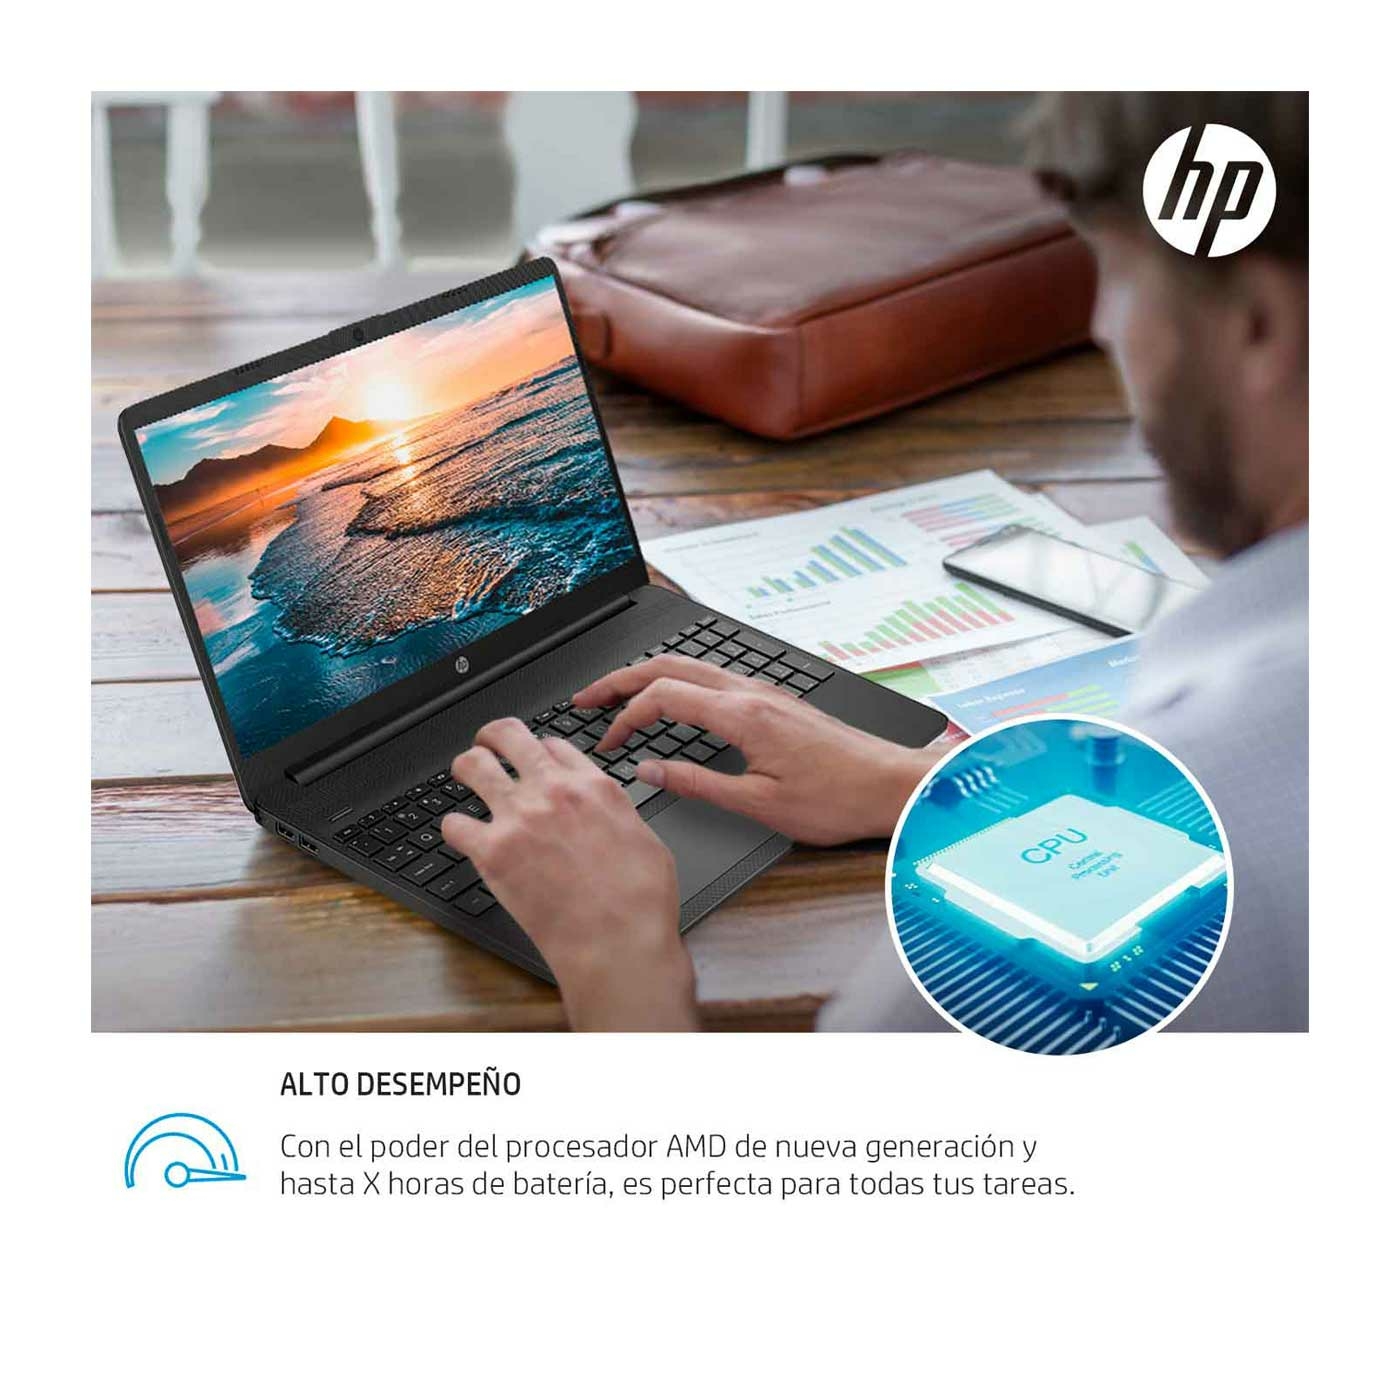 Computador Portátil HP 15.6" Pulgadas ef2510la - AMD Ryzen 3 - RAM 8GB - Disco SSD 512 GB - Negro